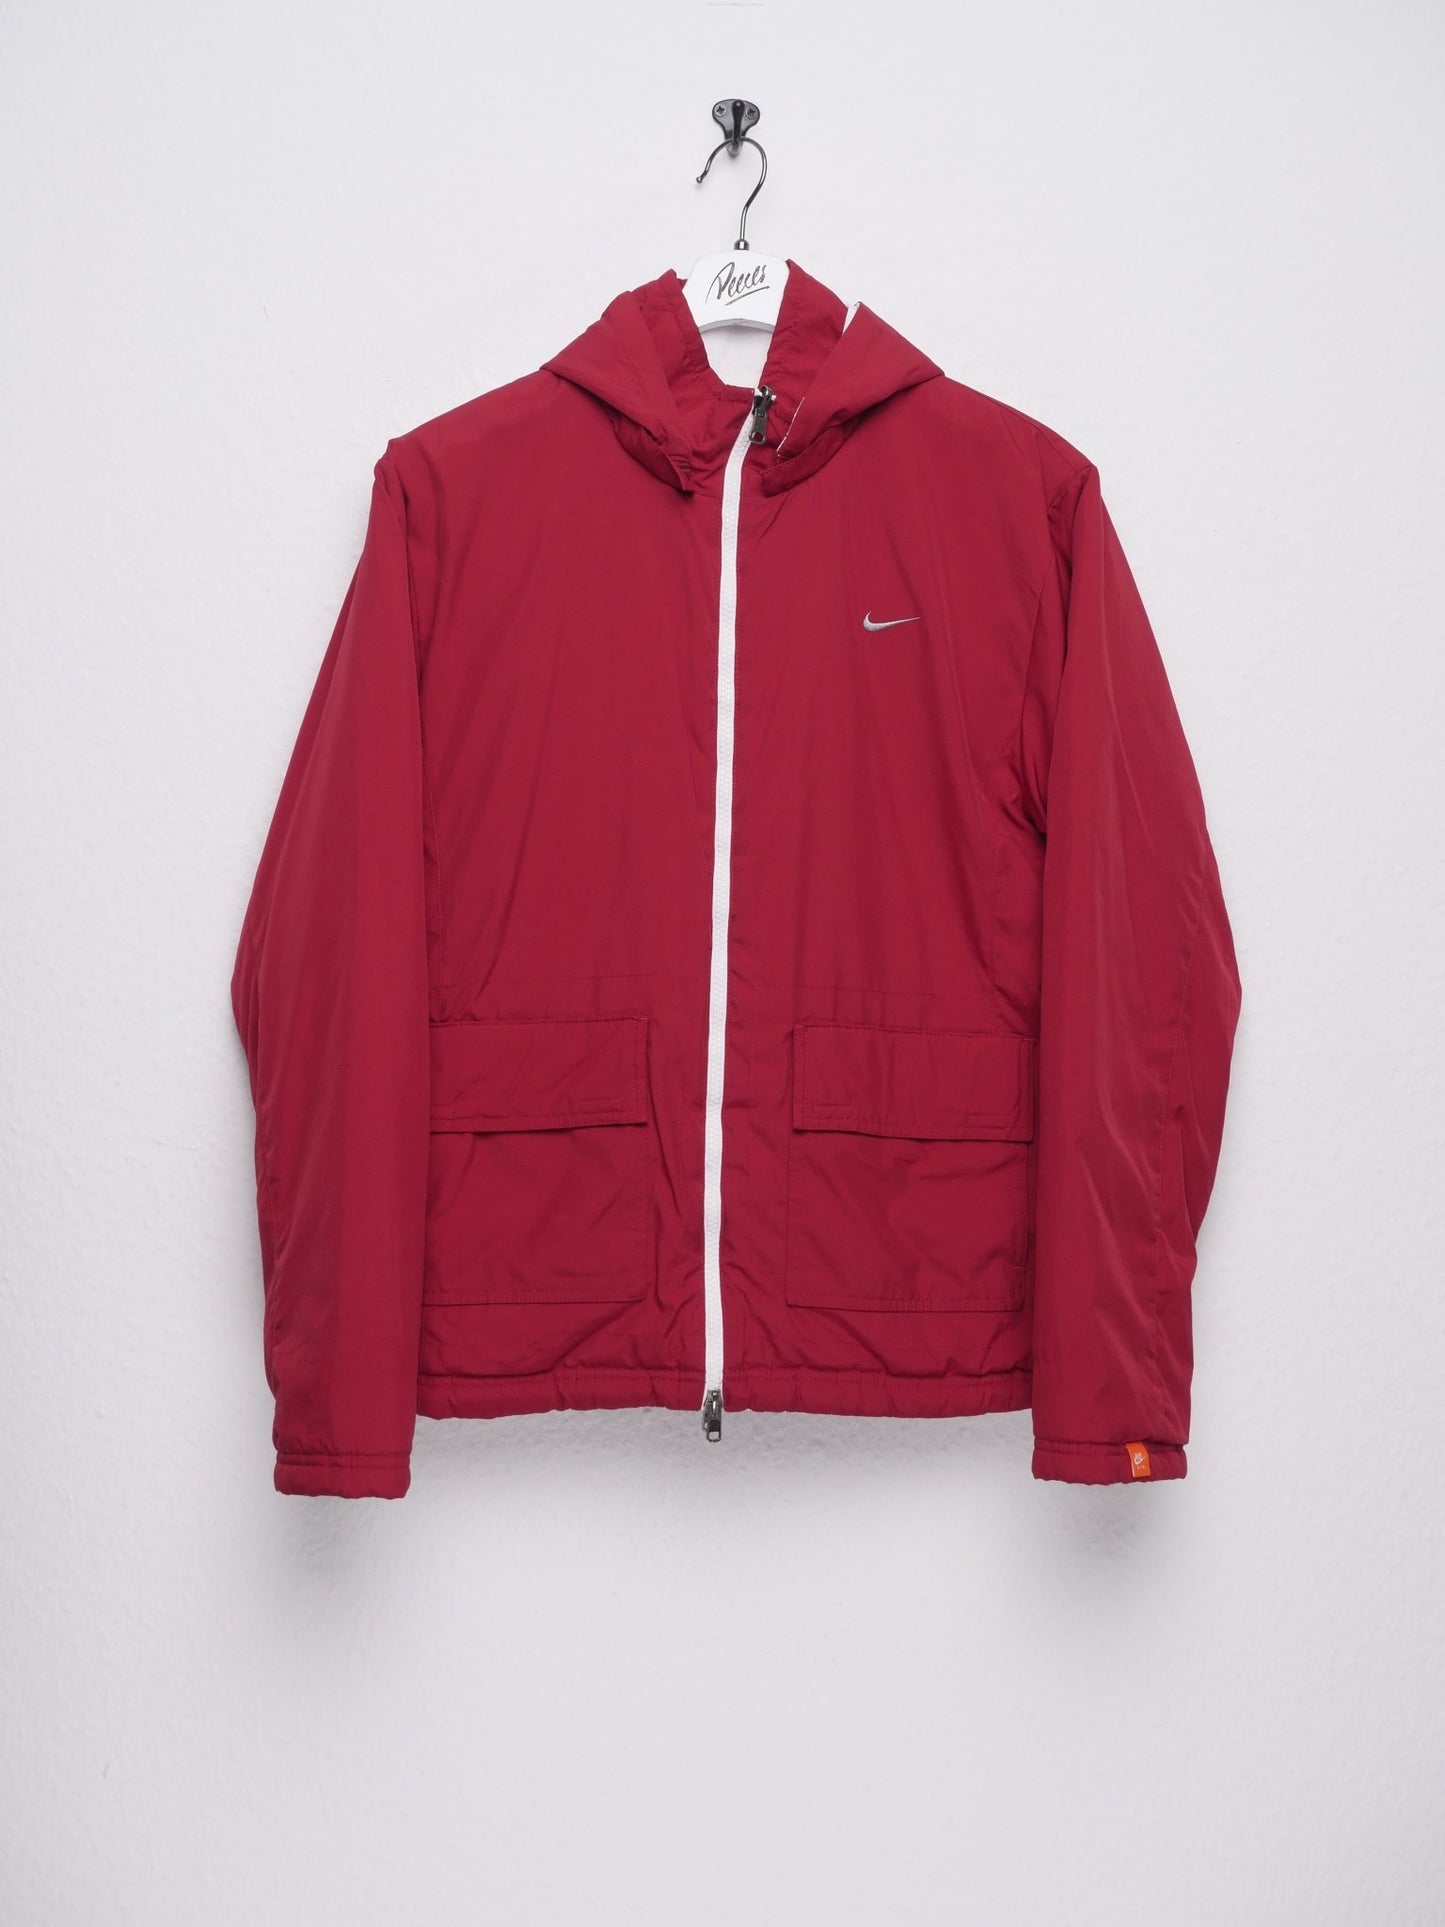 Nike embroidered Swoosh basic red Jacke - Peeces